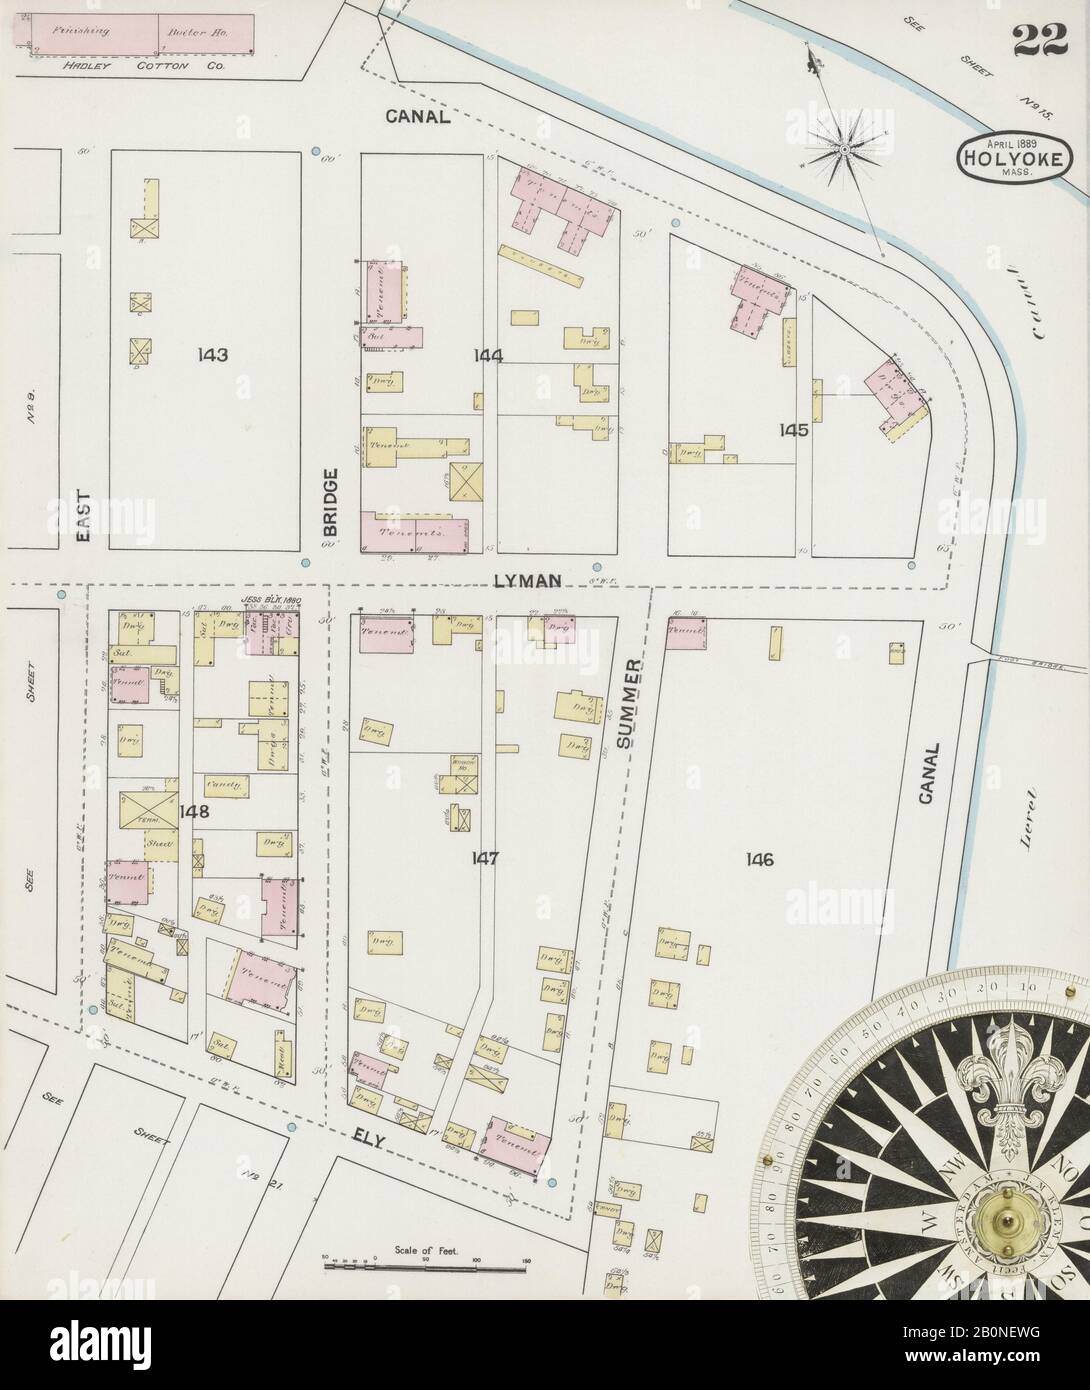 Bild 22 von Sanborn Fire Insurance Map aus Holyoke, Hampden County, Massachusetts. Apr. 30 Blatt(e), Amerika, Straßenkarte mit einem Kompass Aus Dem 19. Jahrhundert Stockfoto